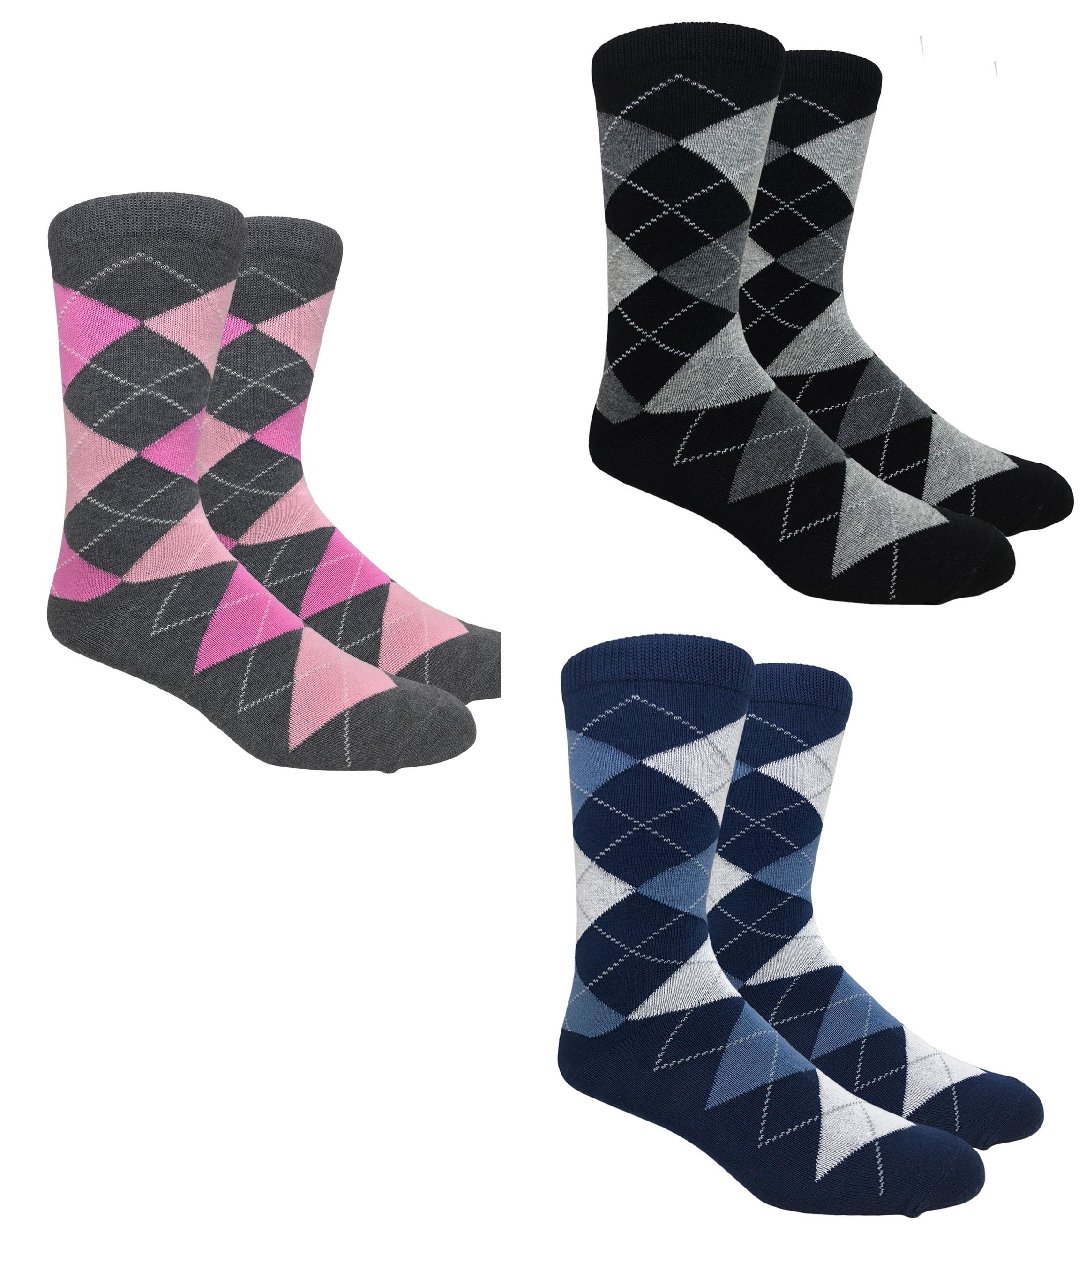 Big Tall Argyle Socks for Men 3 pack 13-15 - image 1 of 4